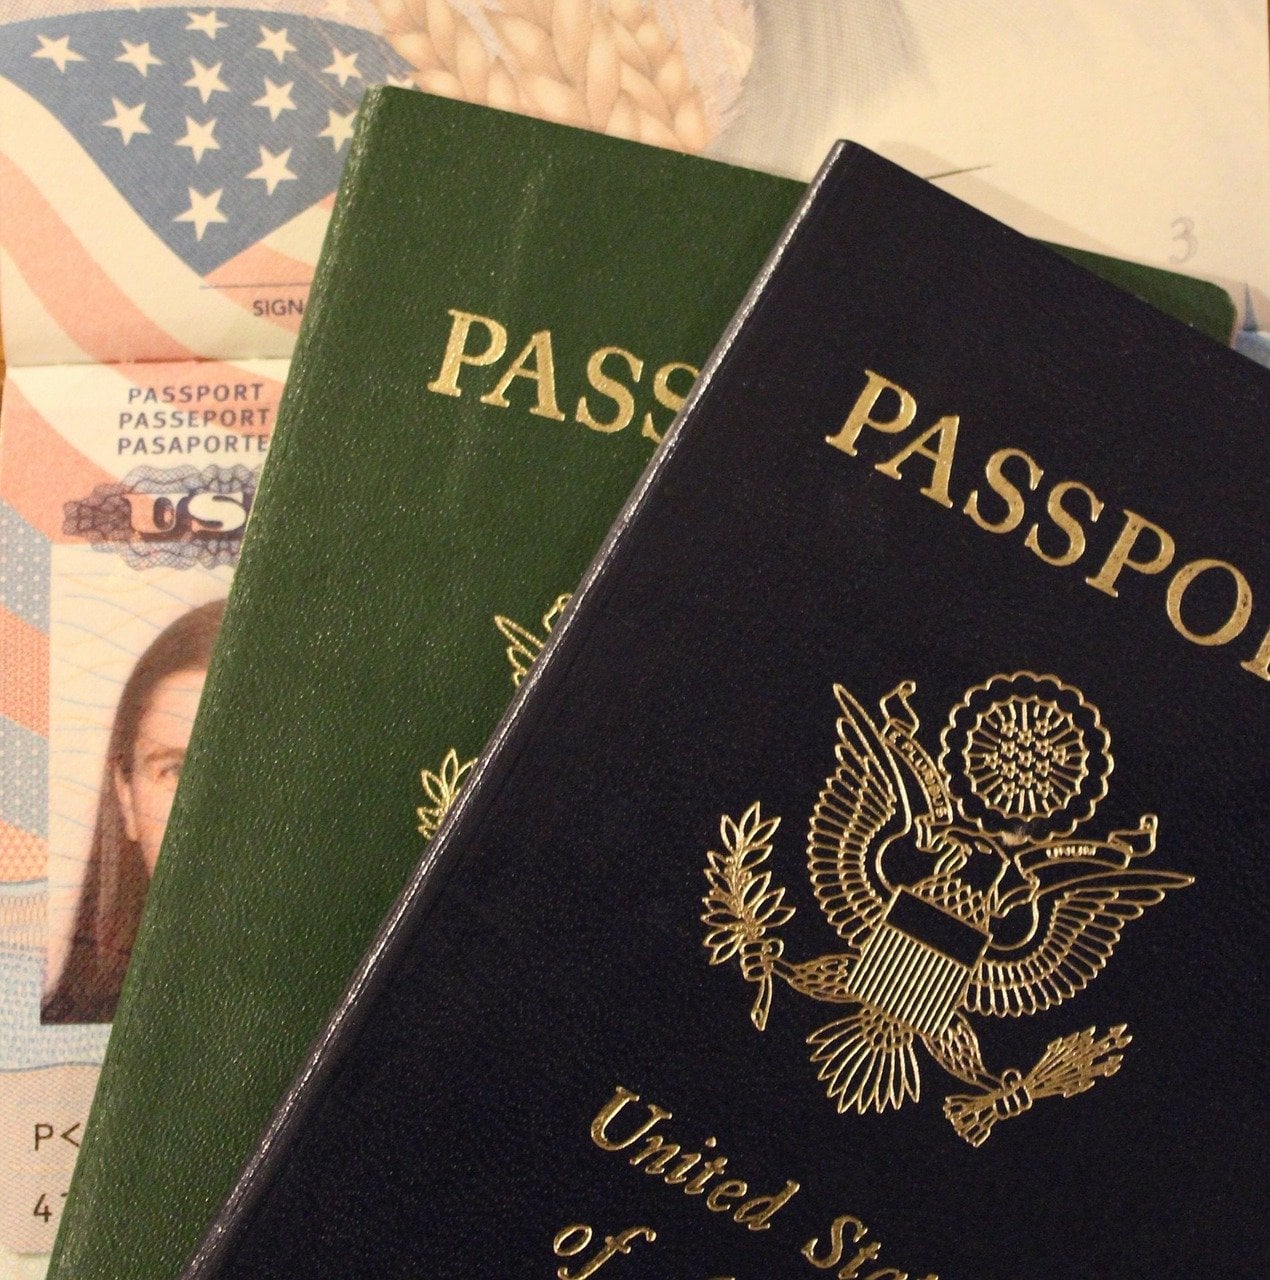 Suspending New Work Visas birth tourism H-1B